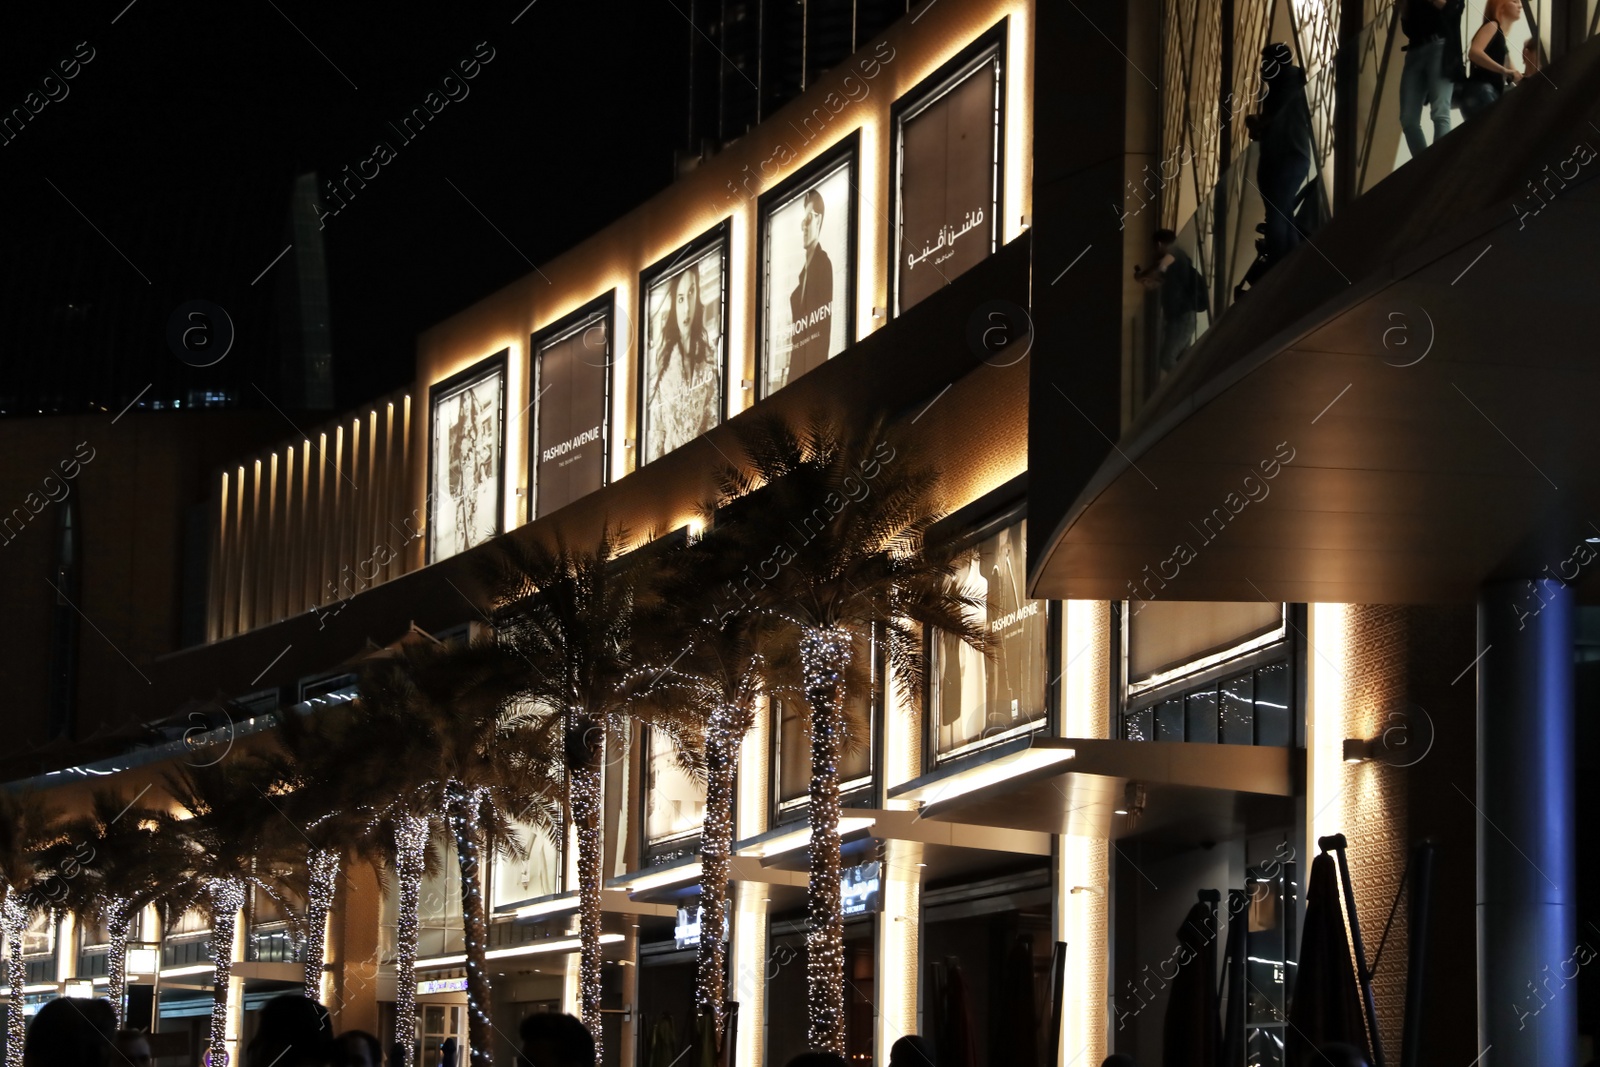 Photo of DUBAI, UNITED ARAB EMIRATES - NOVEMBER 04, 2018: Illuminated building and palms decorated with garlands on city street